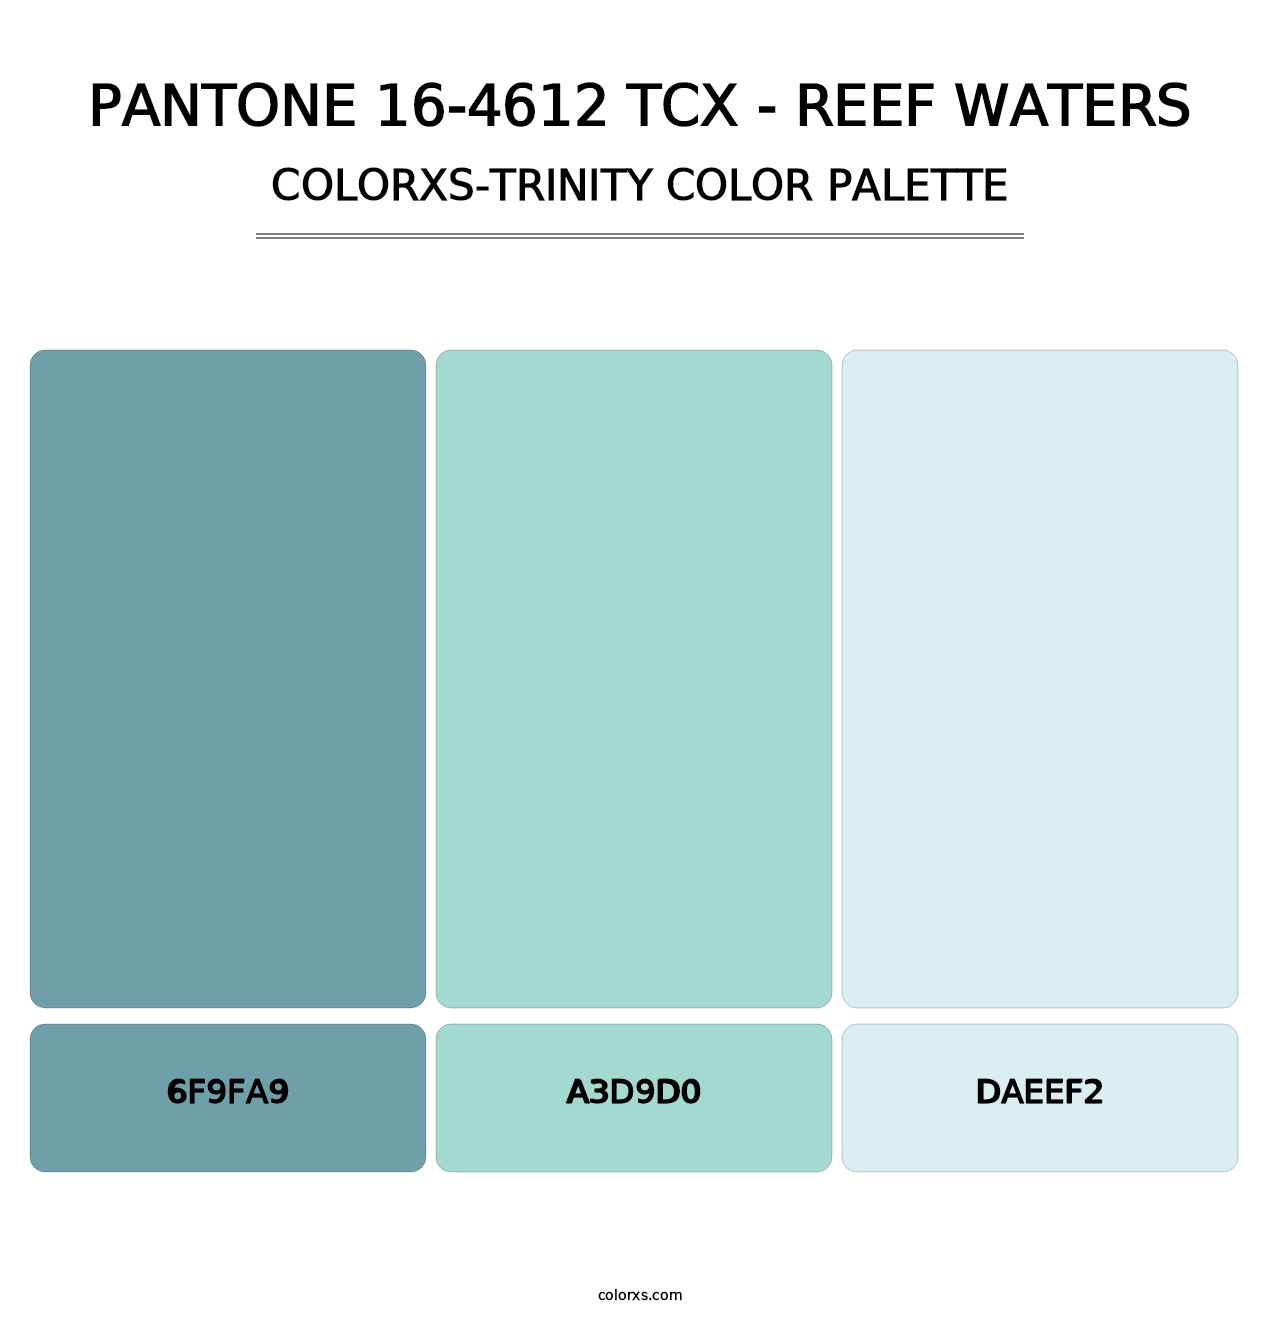 PANTONE 16-4612 TCX - Reef Waters - Colorxs Trinity Palette